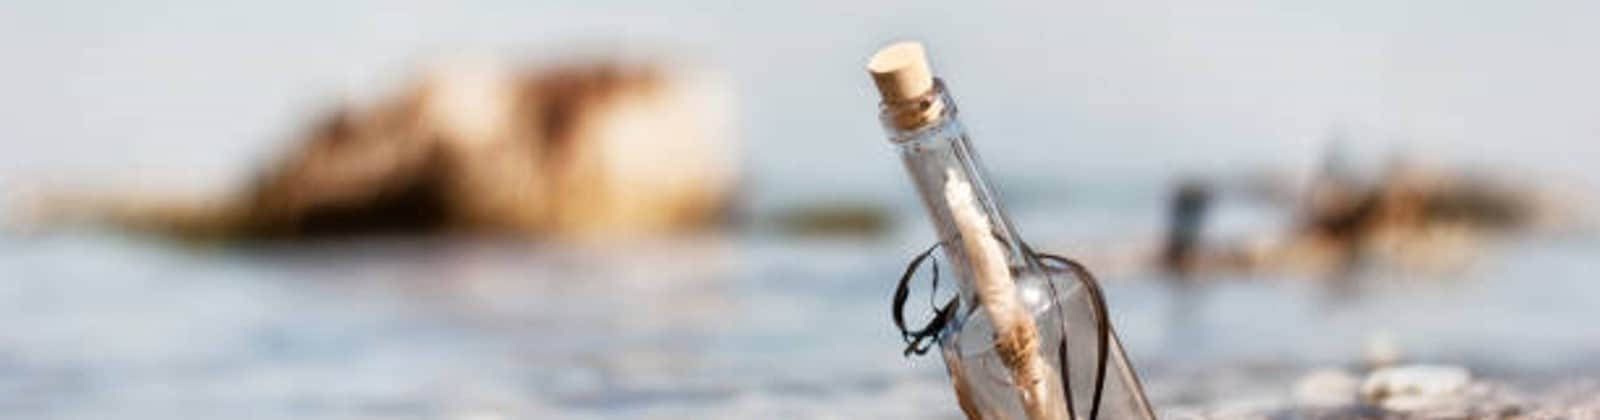 bottle on beach image